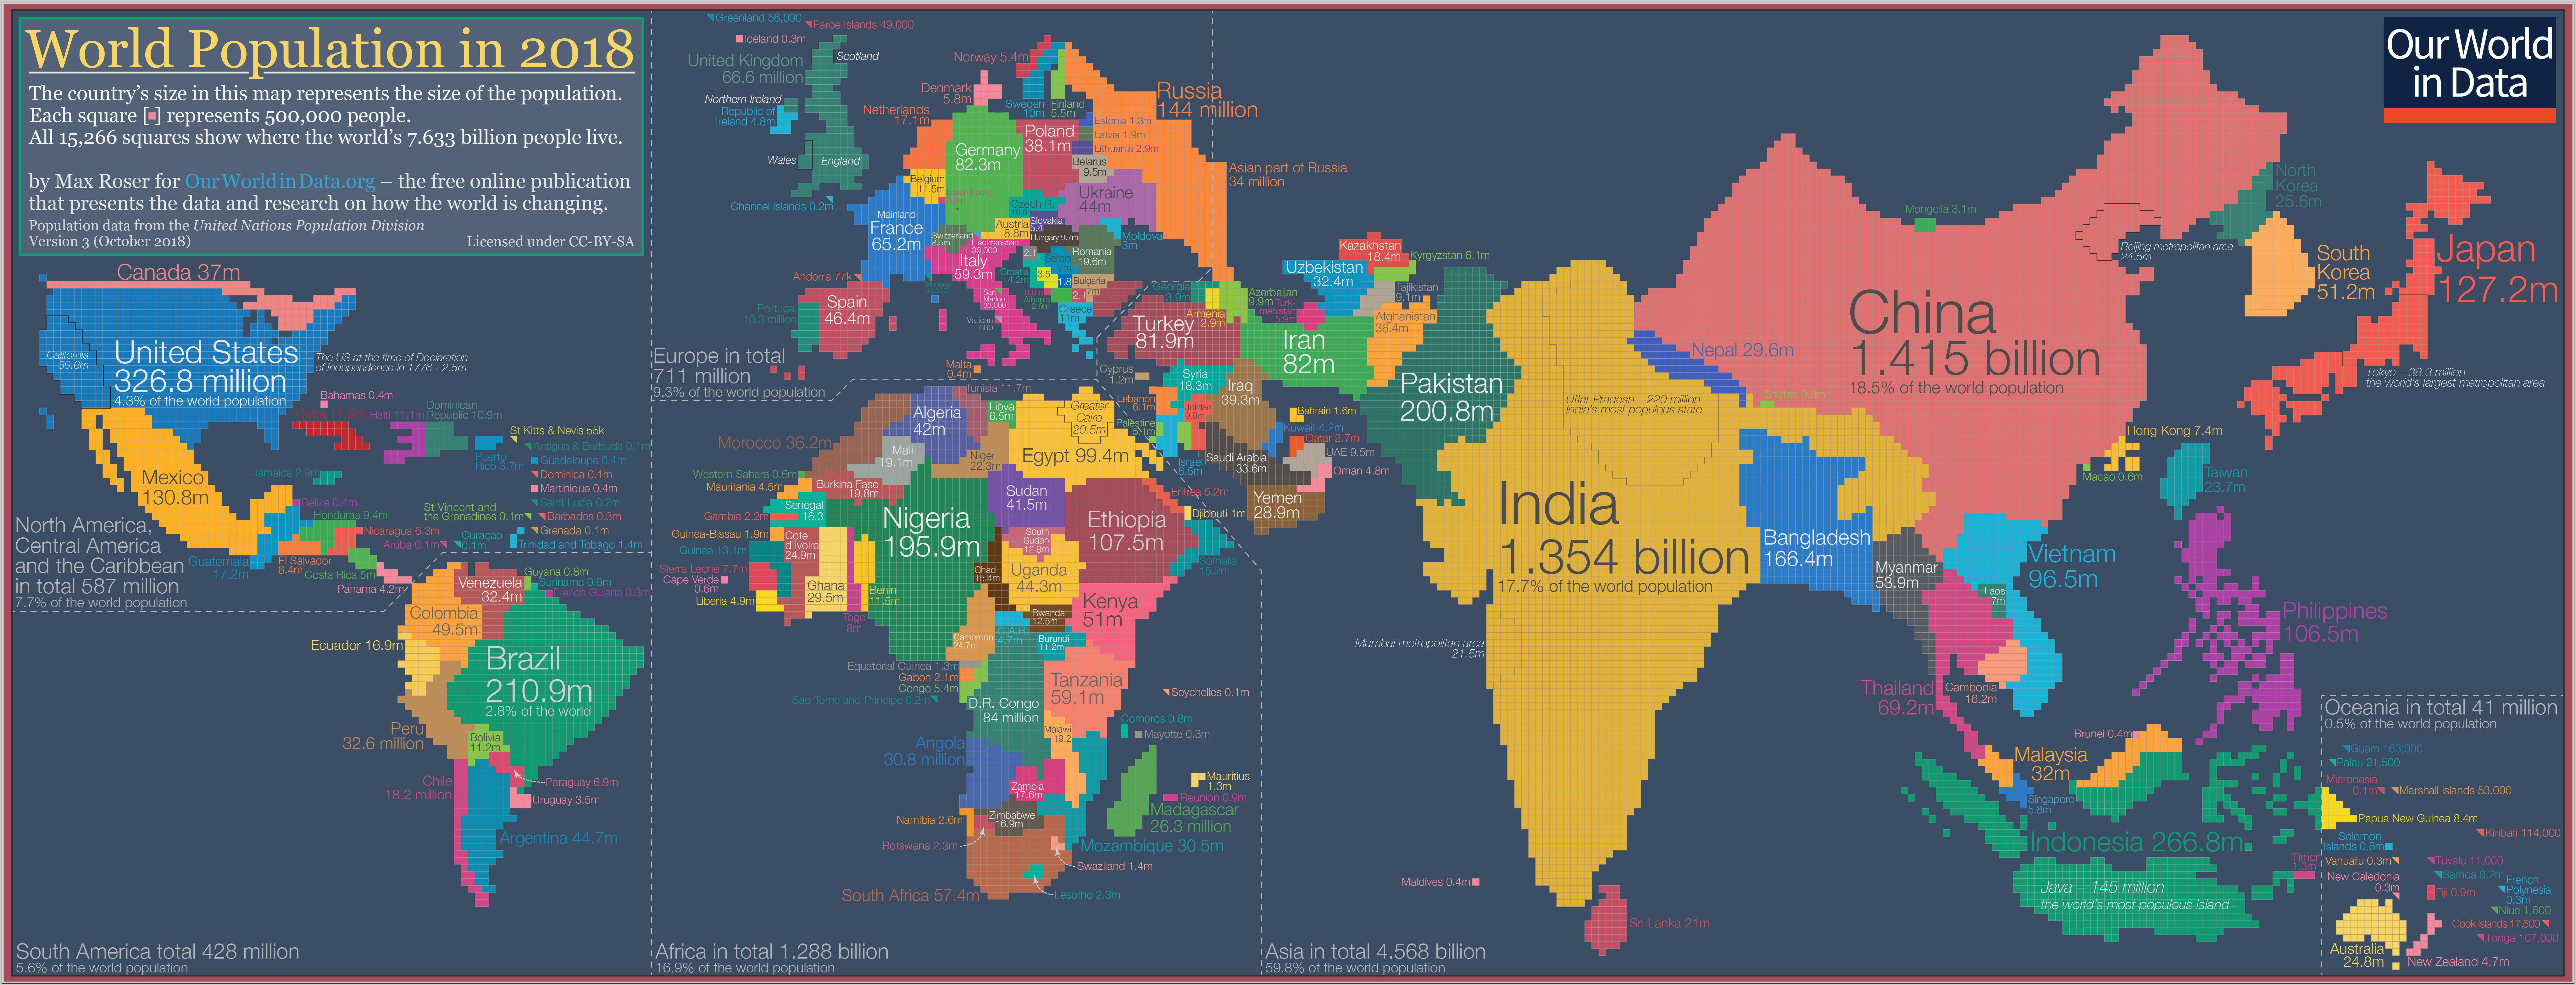 Cartograma poblacional Mundo 2